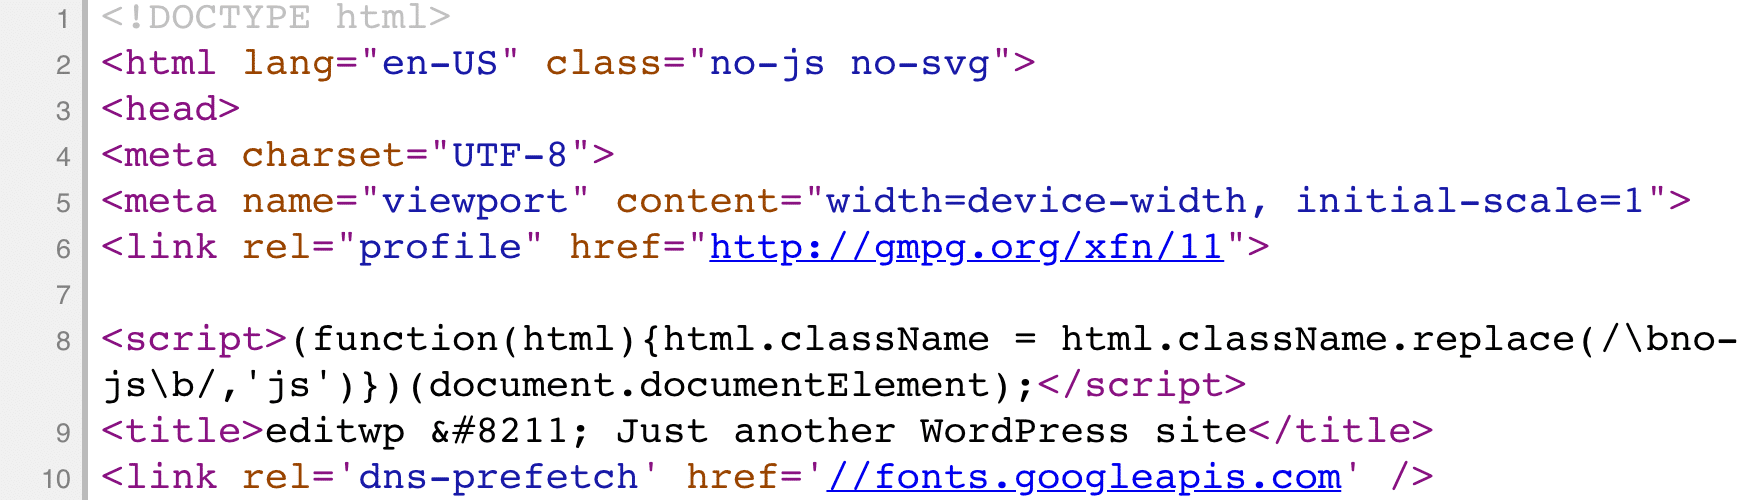 Non-minified HTML